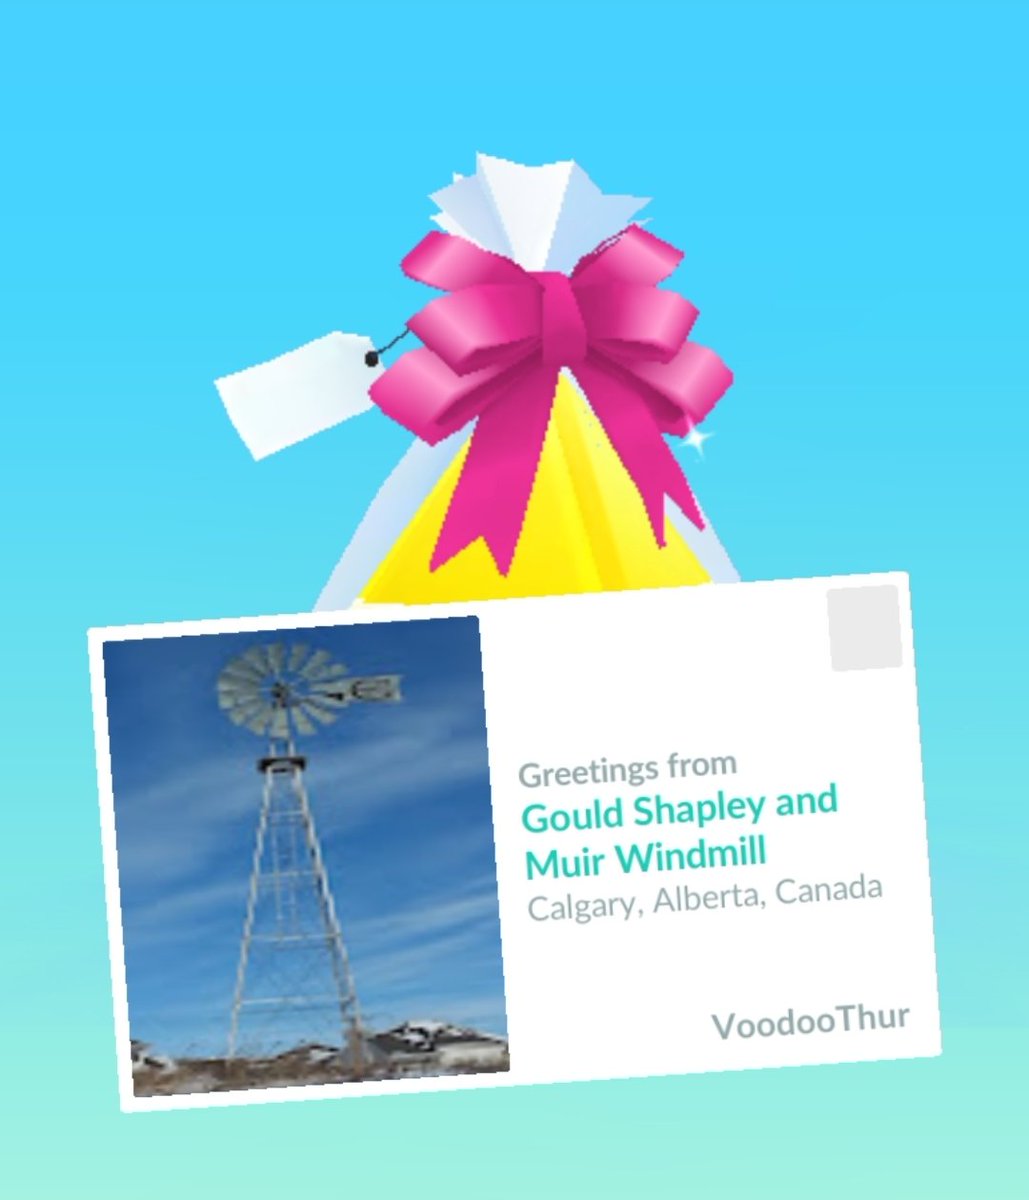 Gould Shapley and Muir Windmill 🌬🔆 Calgary, Alberta, Canada 🇨🇦 #PokemonGO